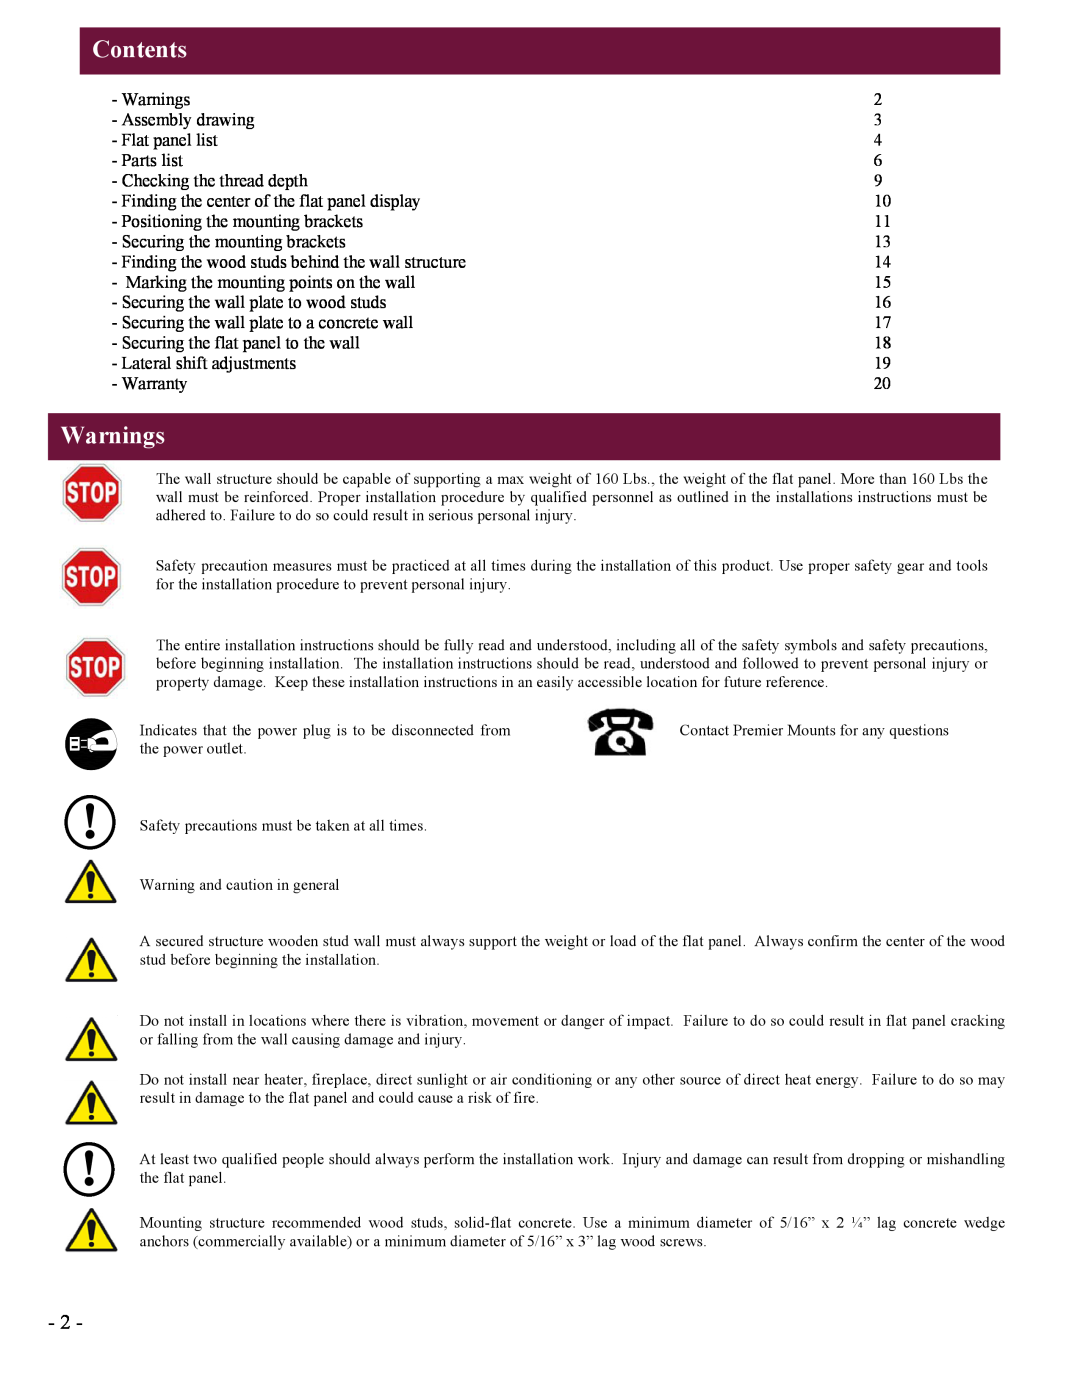 Premier Mounts UFM installation instructions Contents, Warnings 